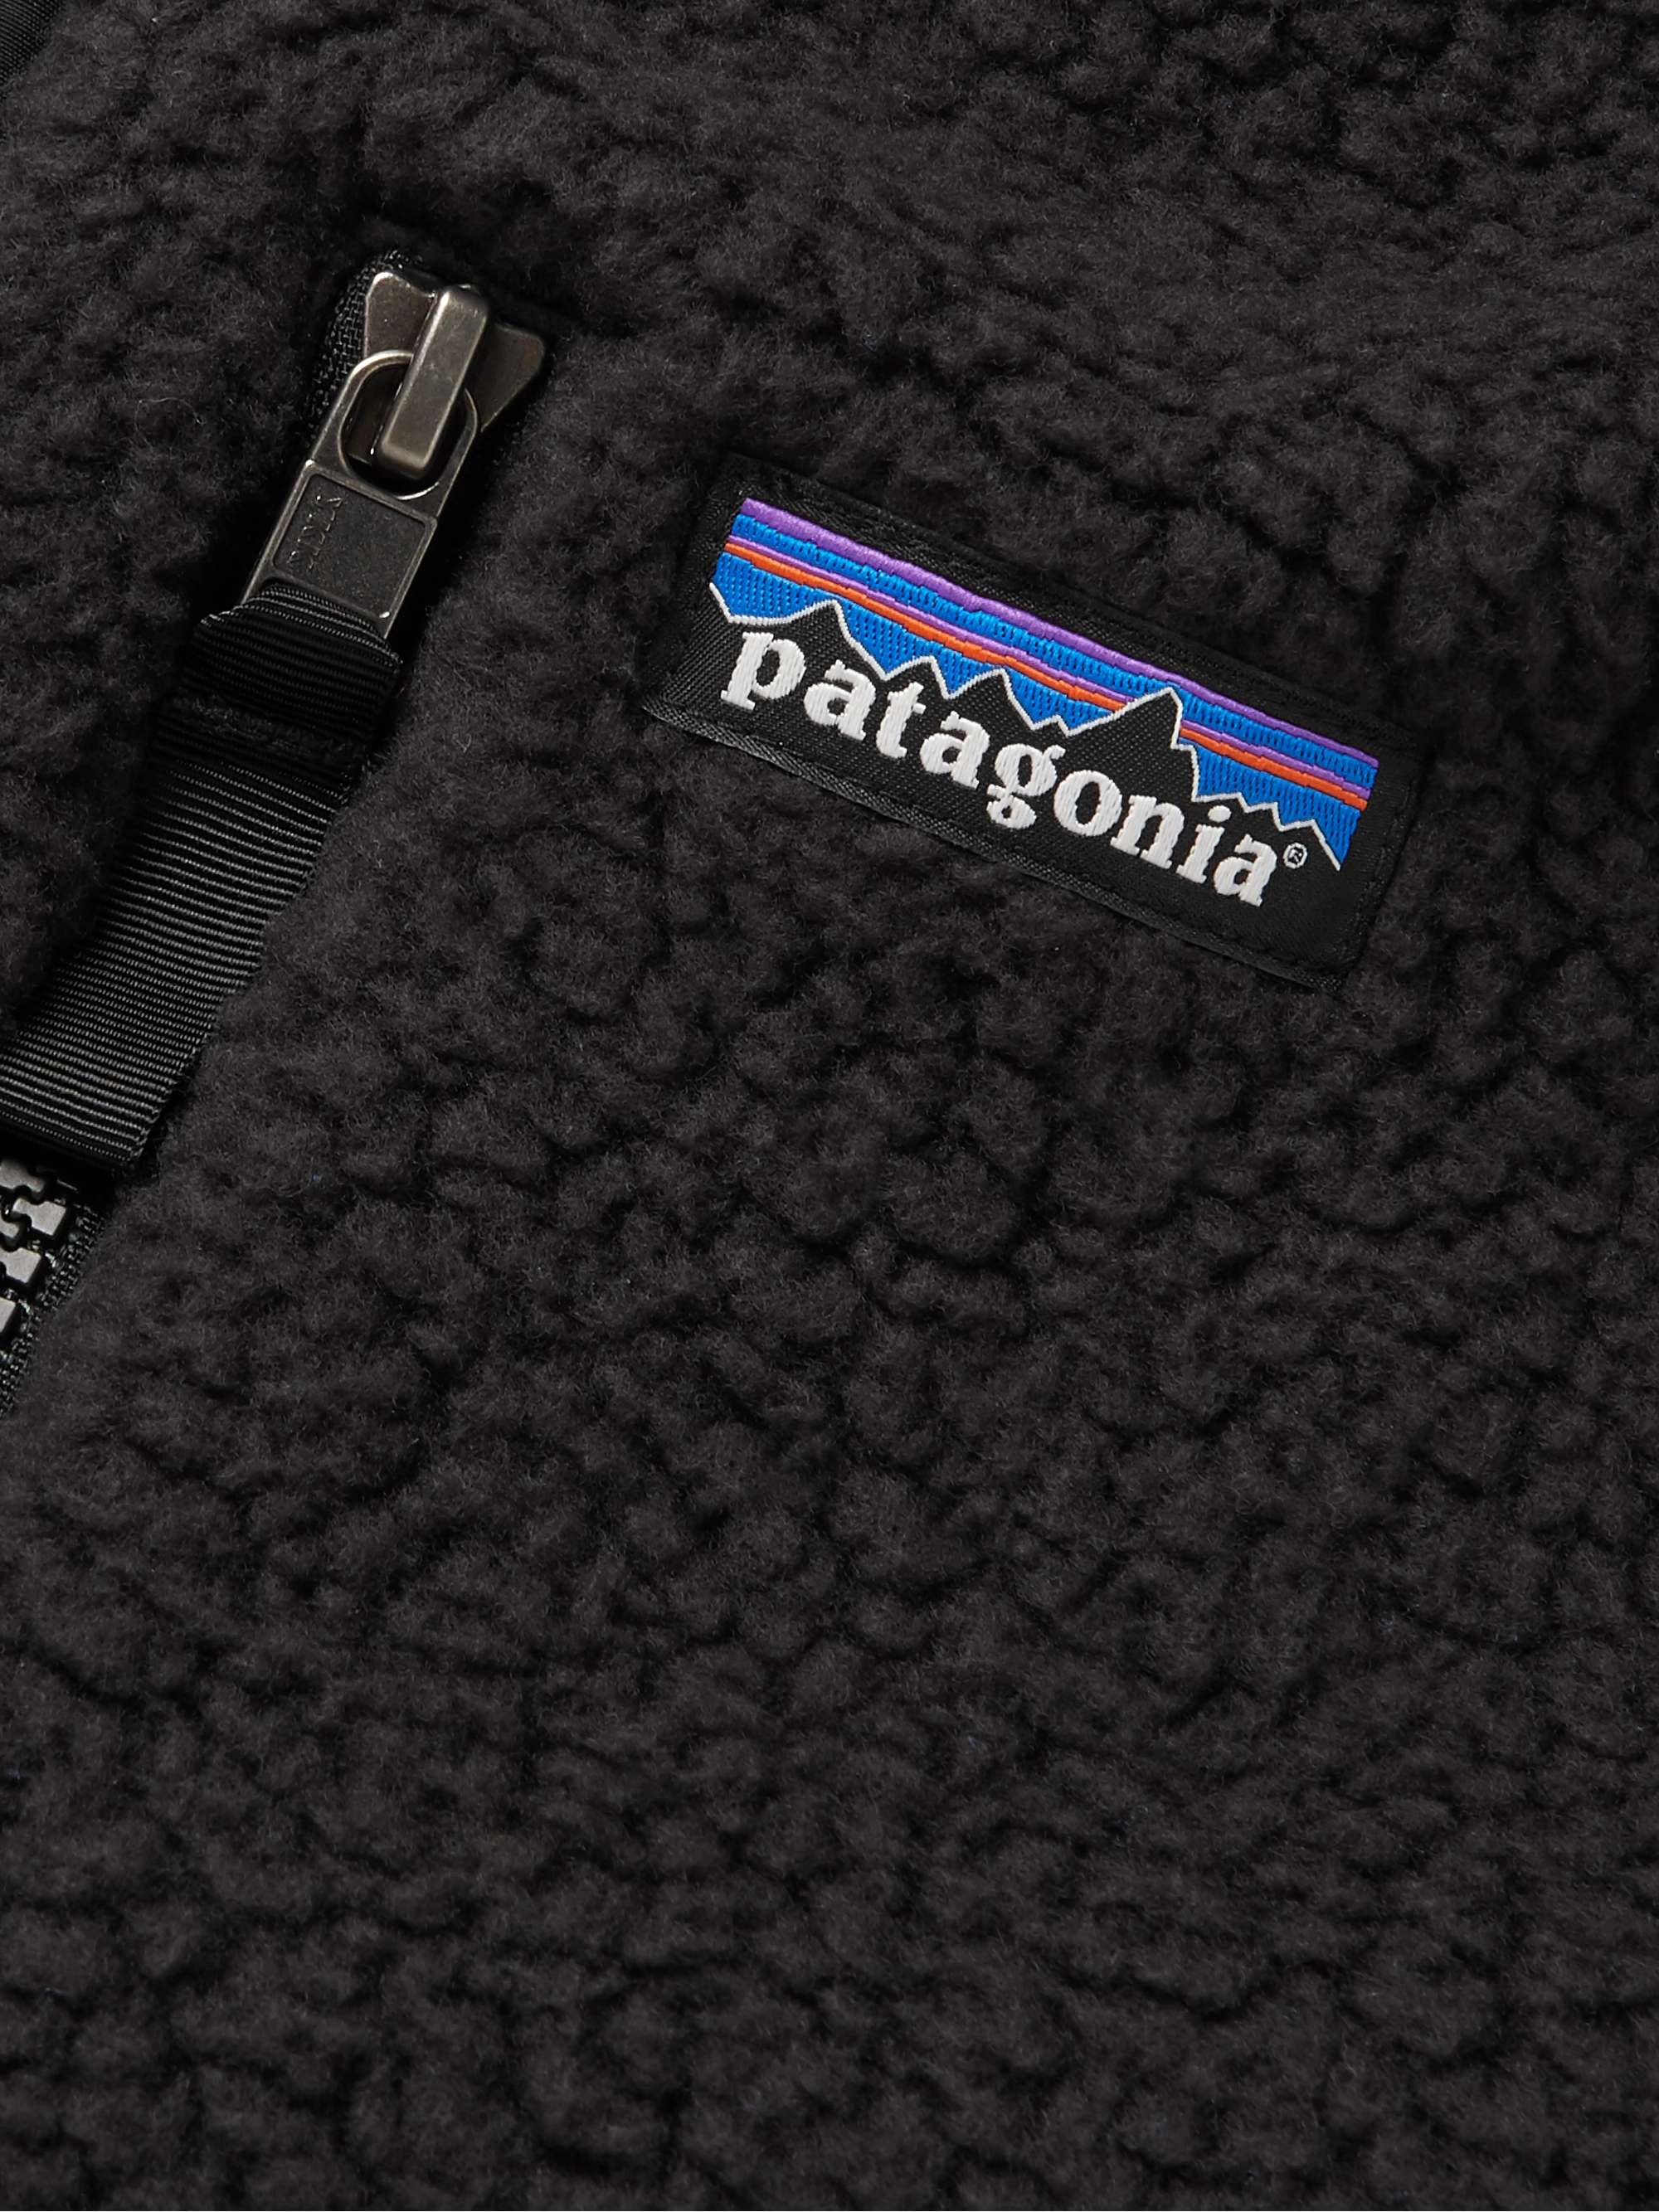 PATAGONIA Retro Pile Slim-Fit Polartec Fleece Gilet